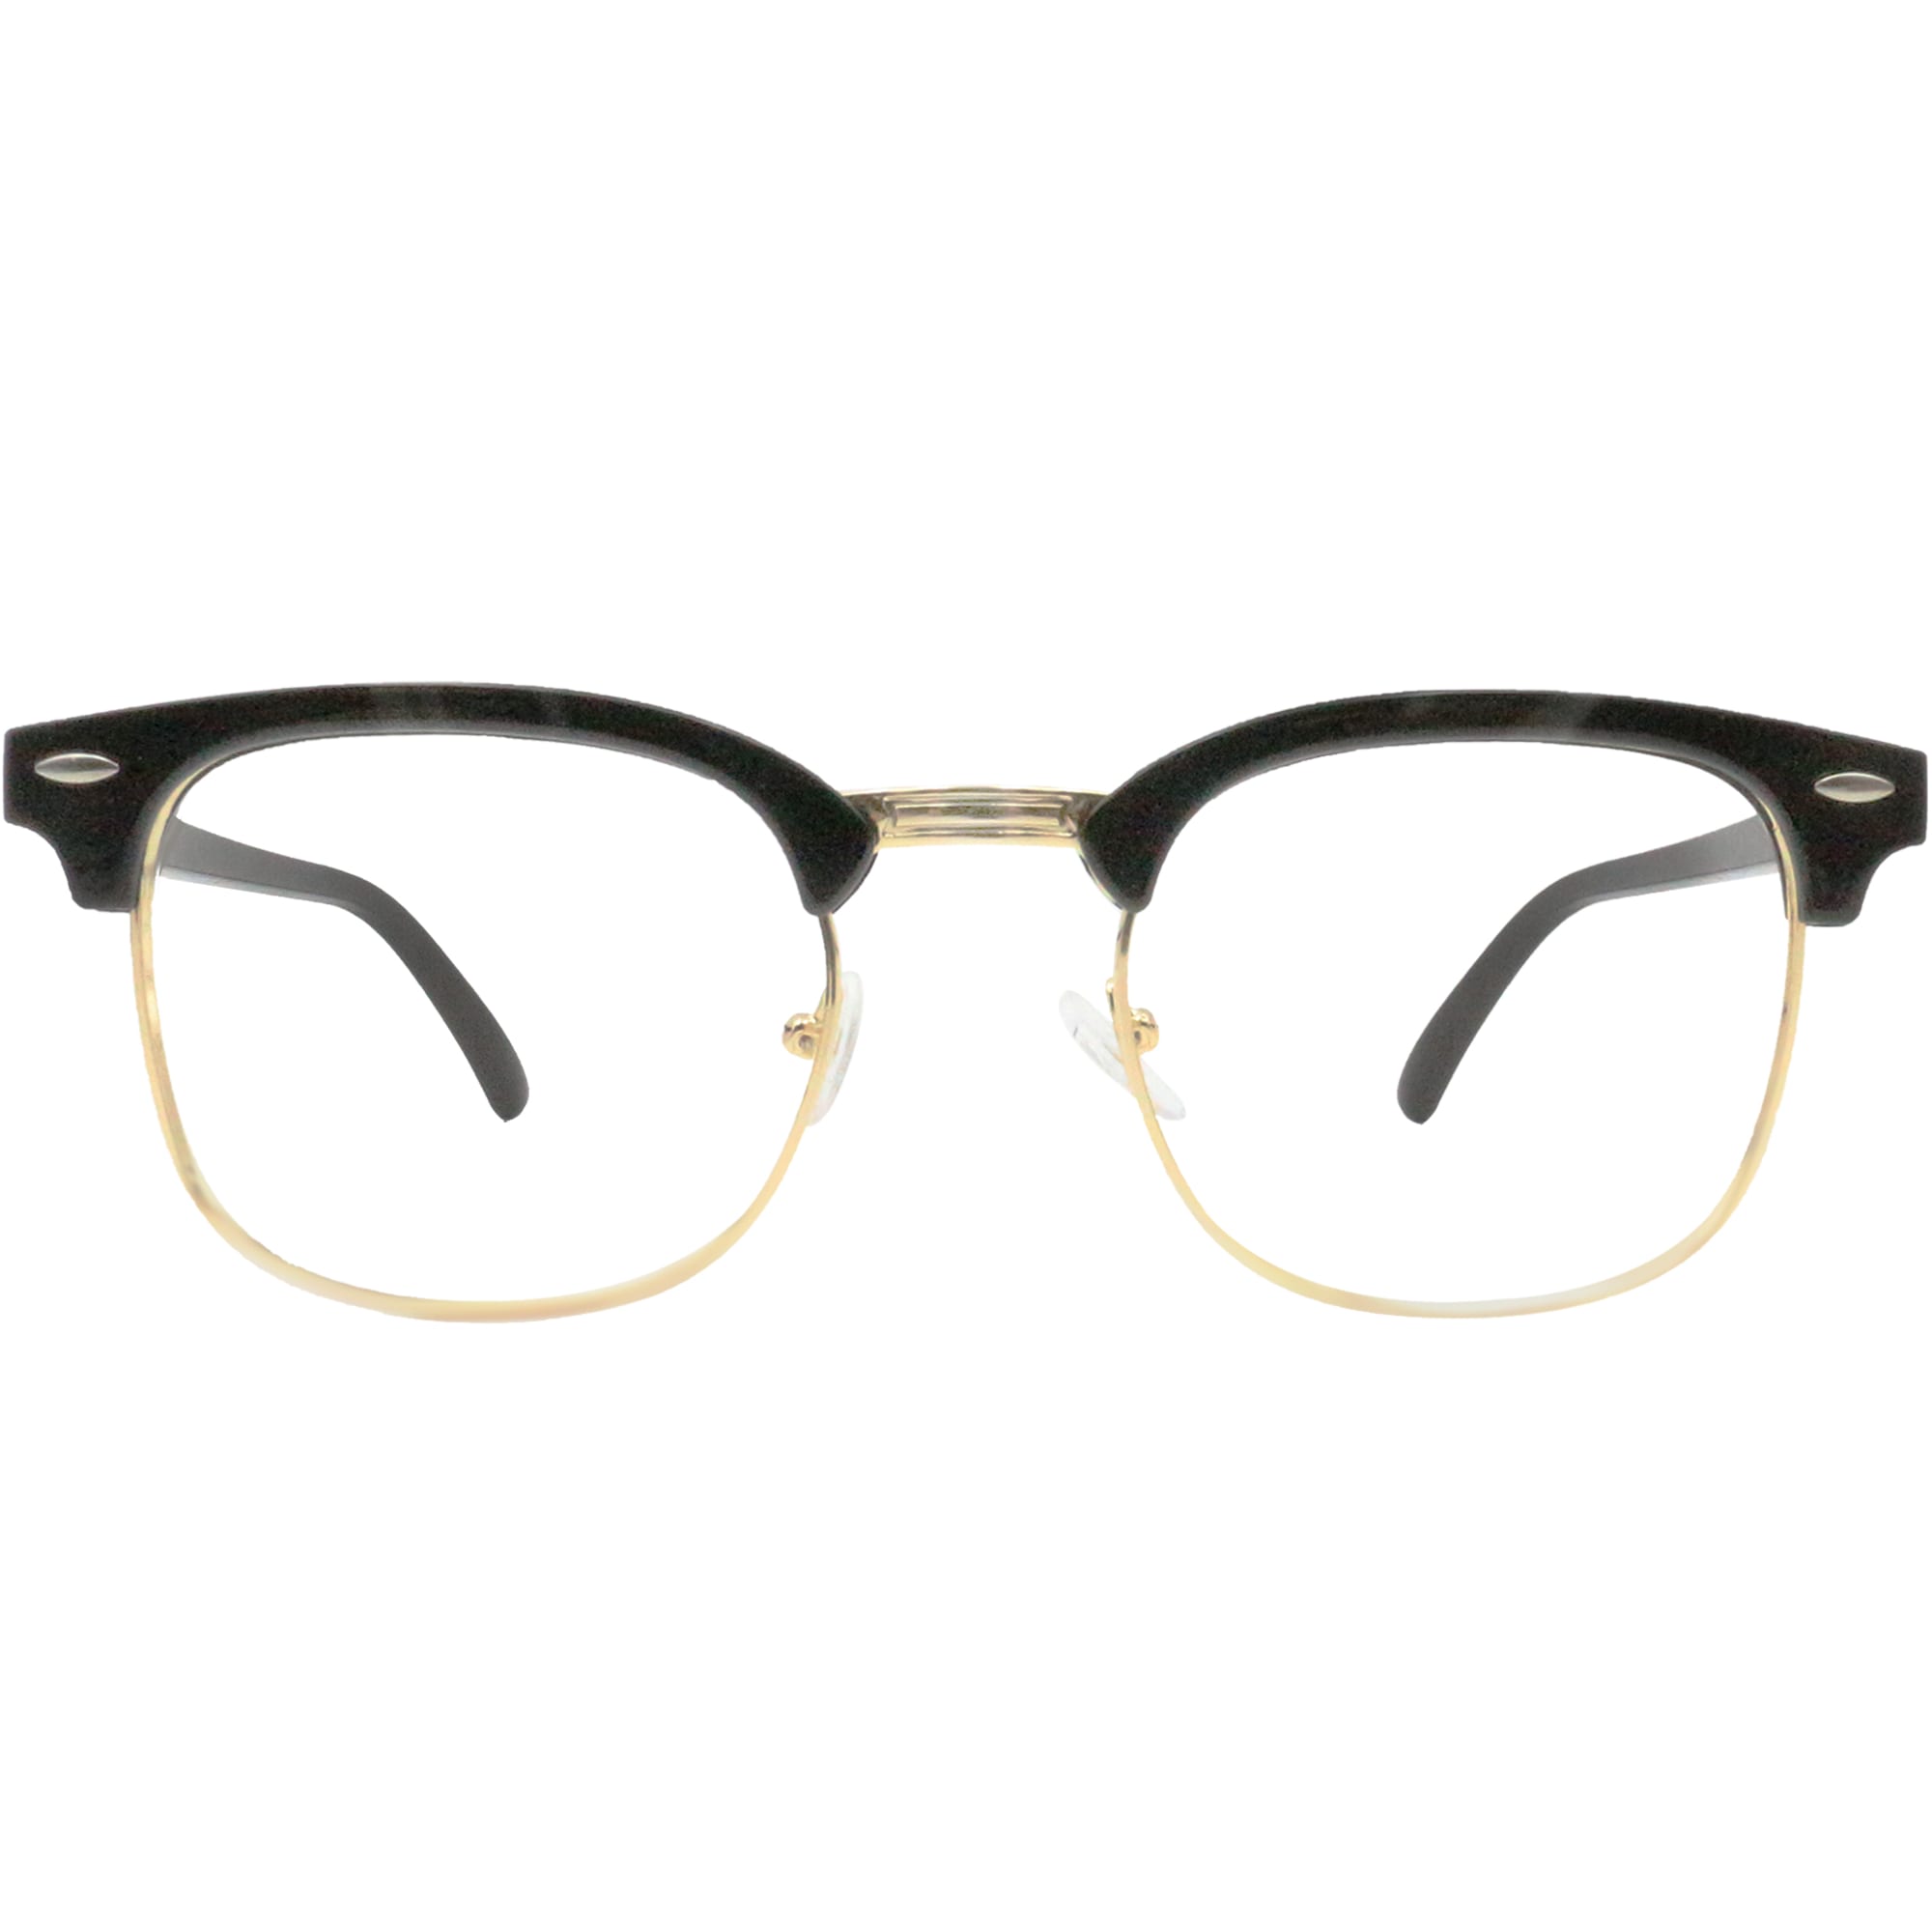 Browline Glasses FV105